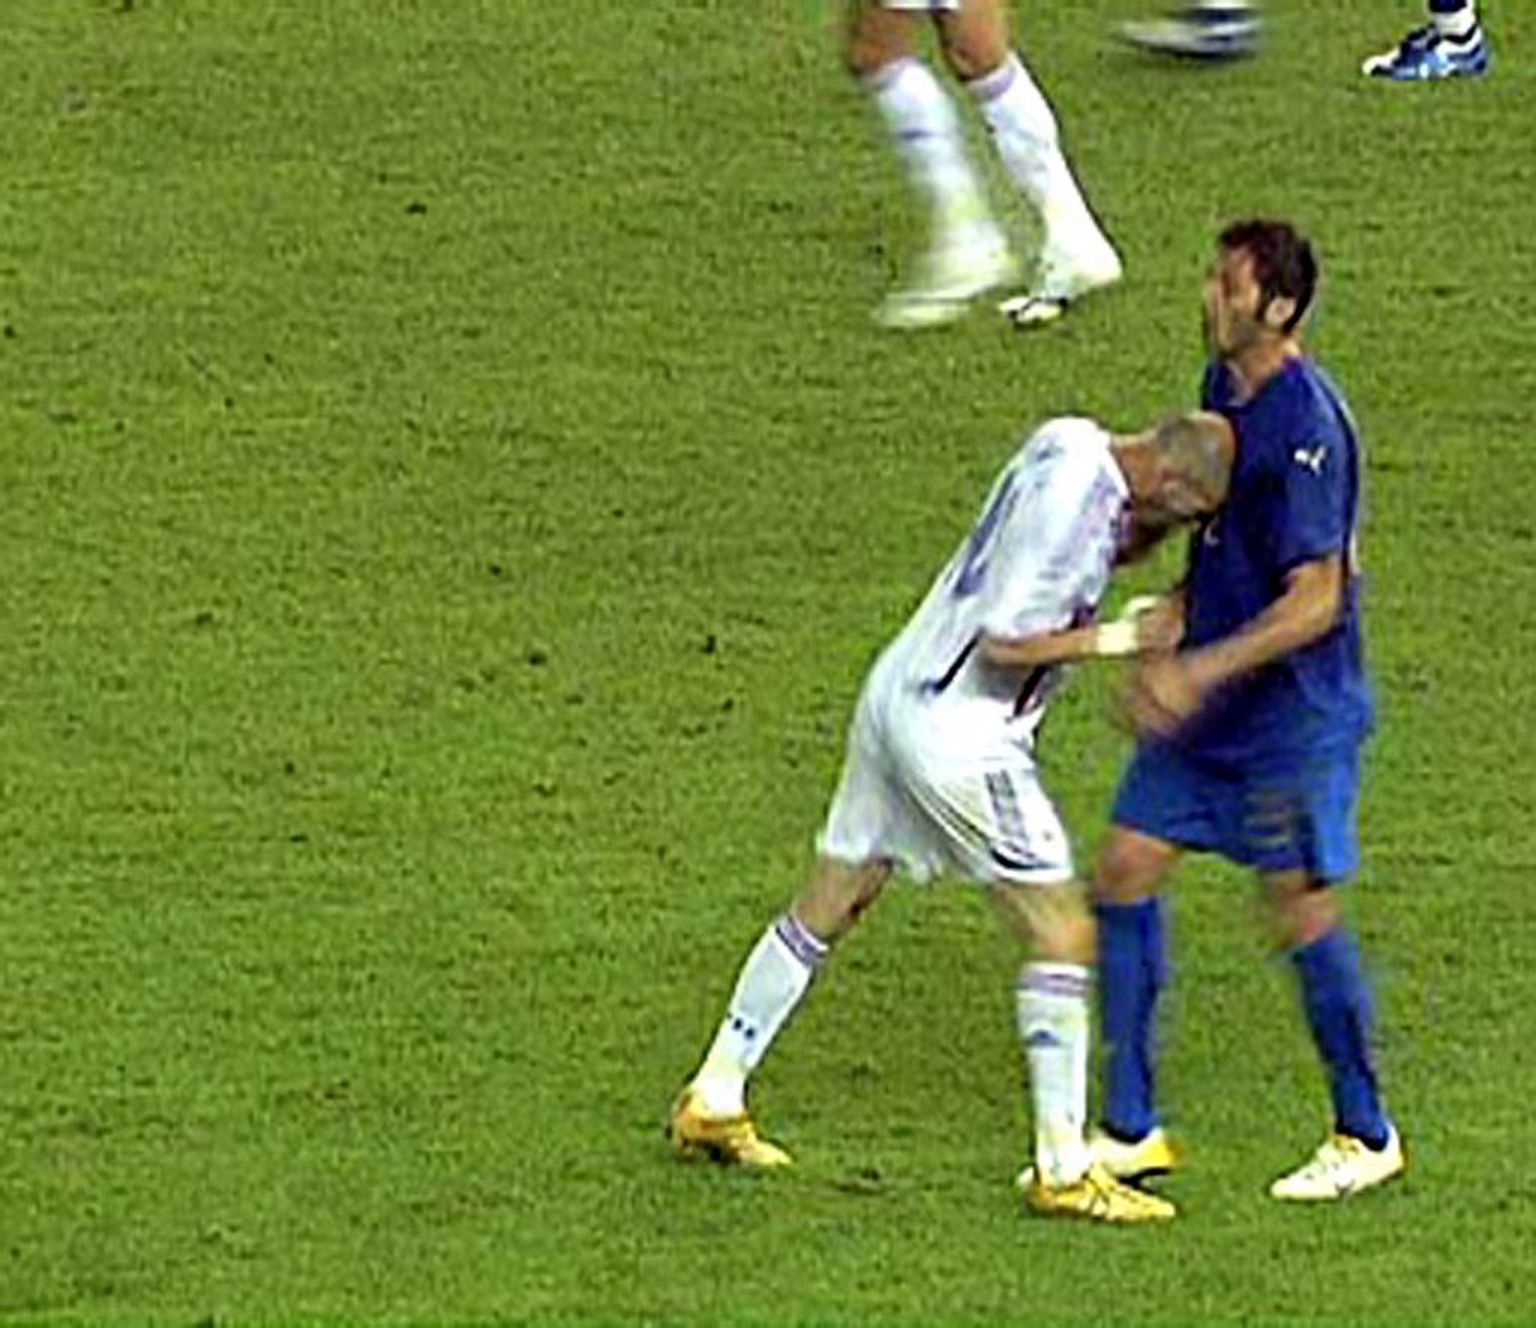 Maailmakuulus stseen, kus Zinedine Zidane lööb peaga Marco Materazzit. .